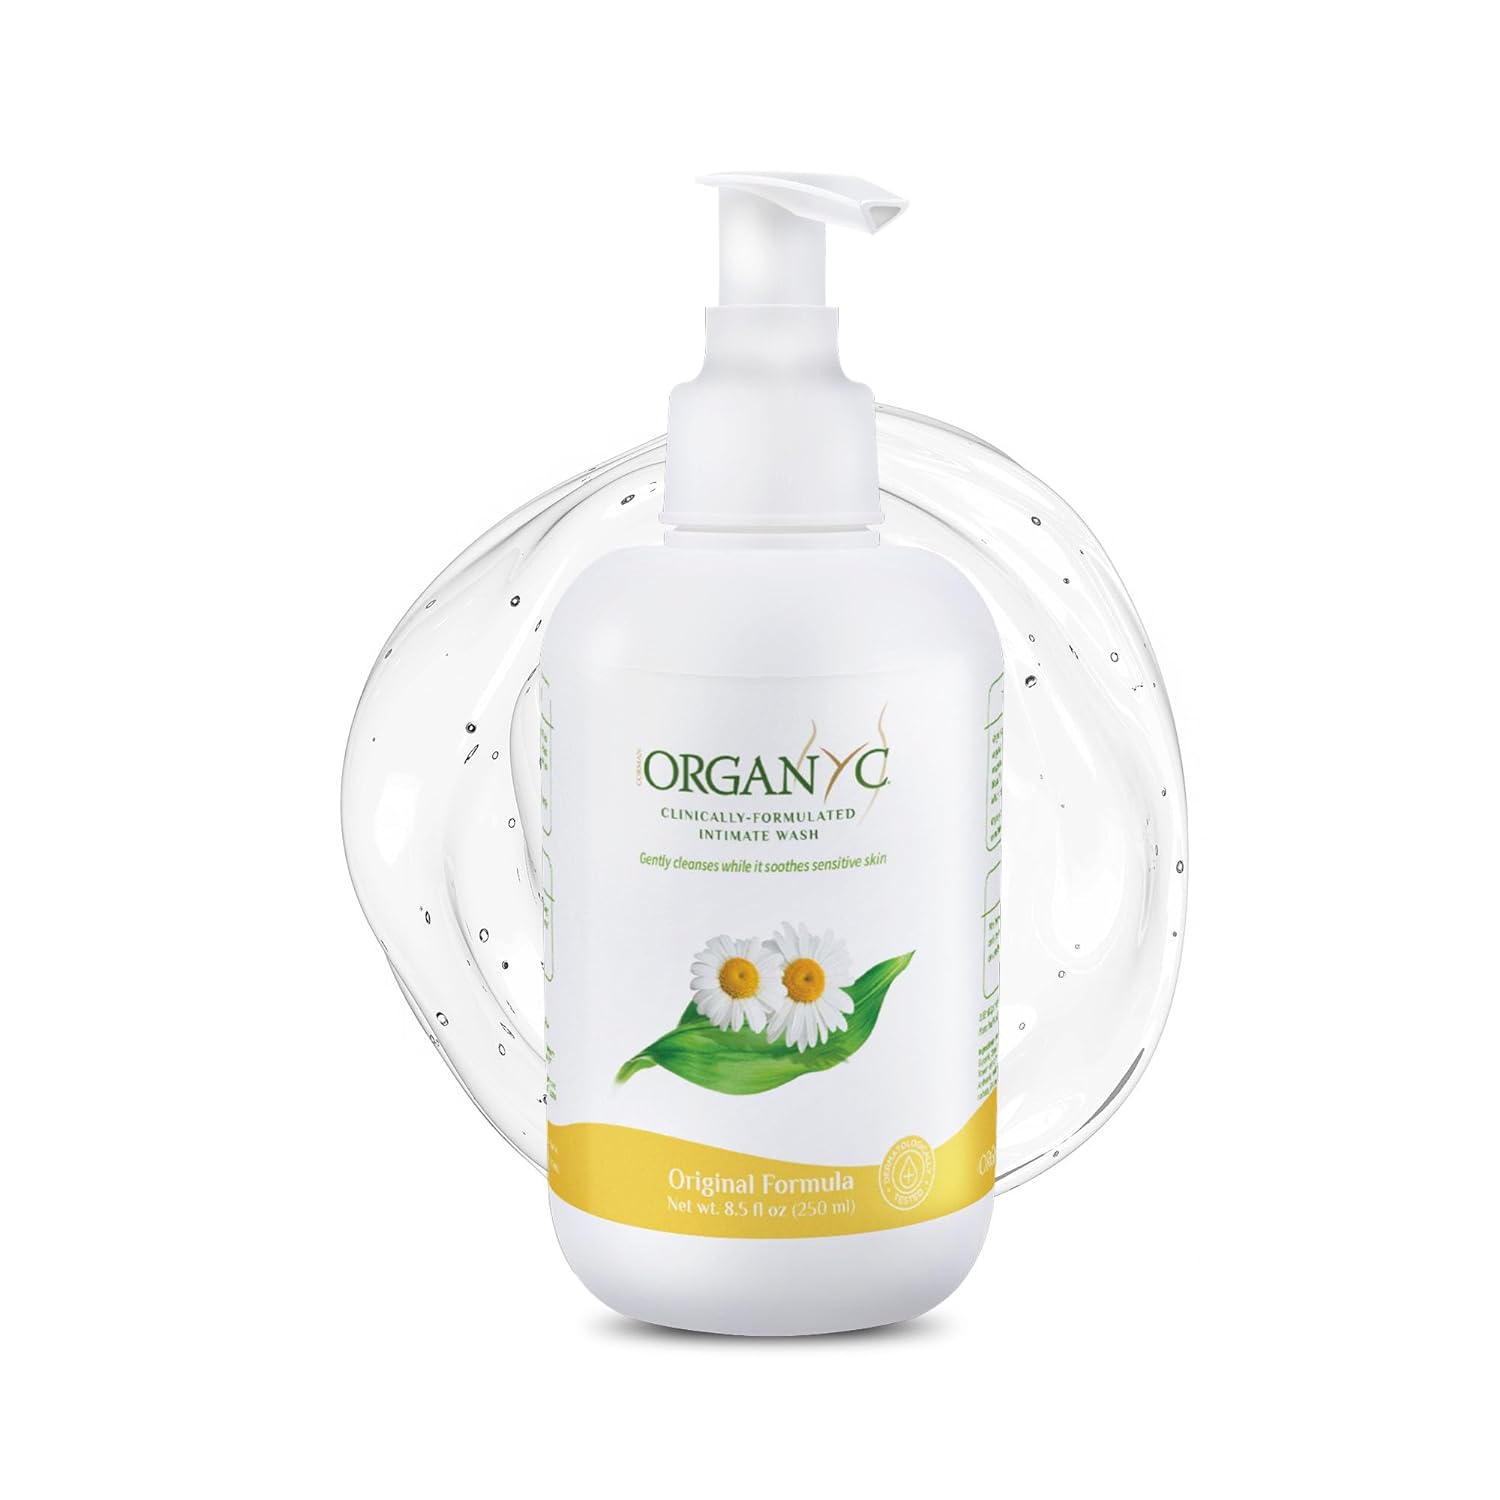 Organyc Feminine Intimate Wash for Sensitive Skin